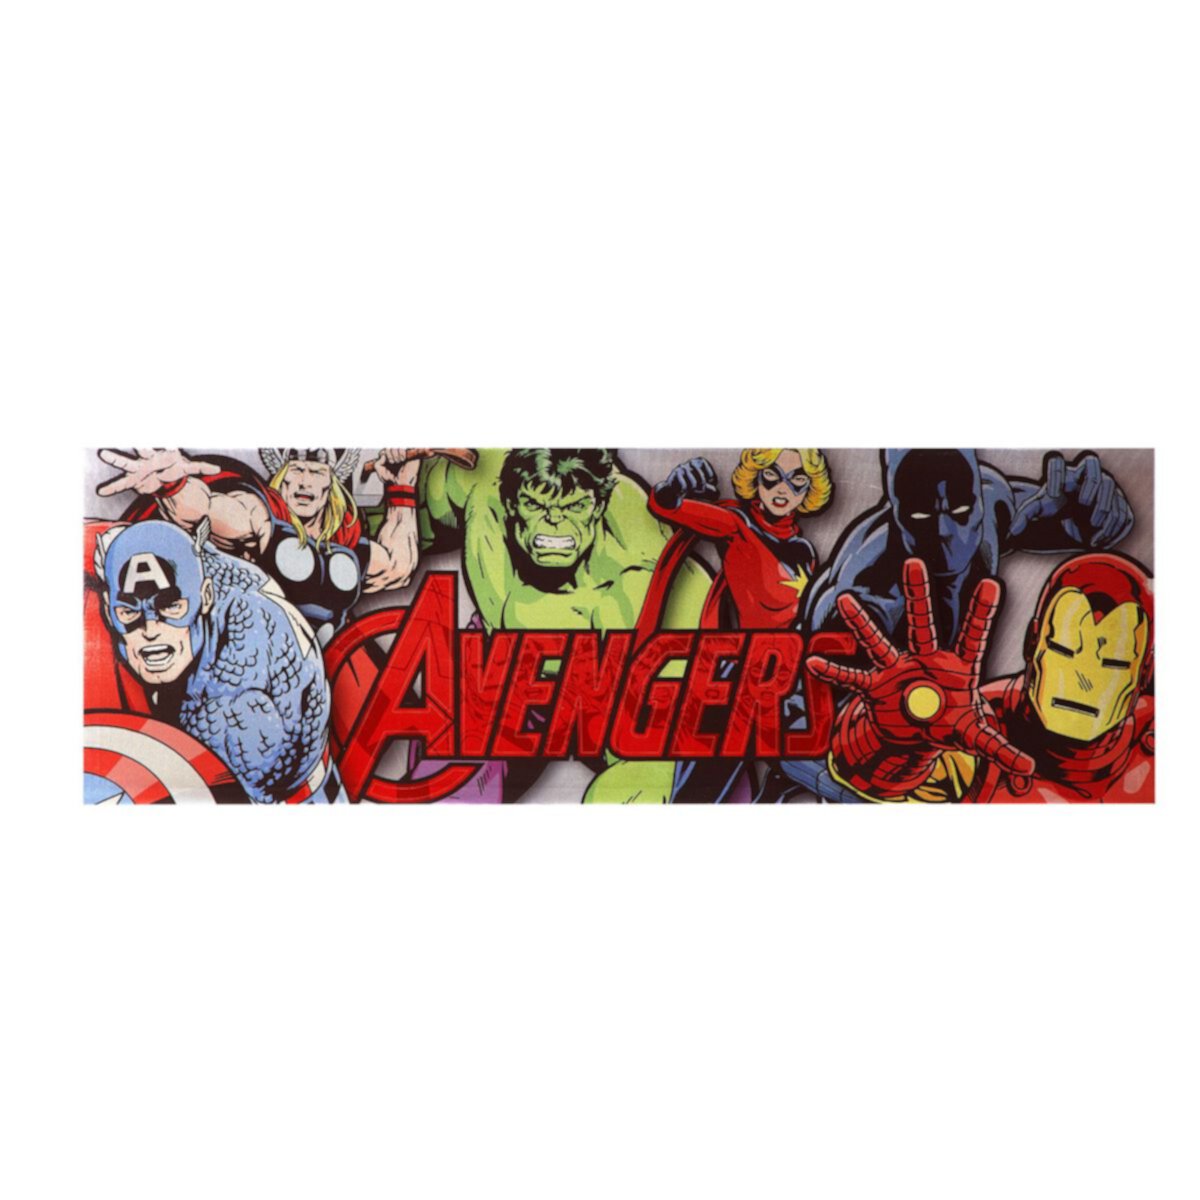 Marvel Avengers Idea Nuova Настенное искусство на холсте с эффектом металлик Idea Nuova